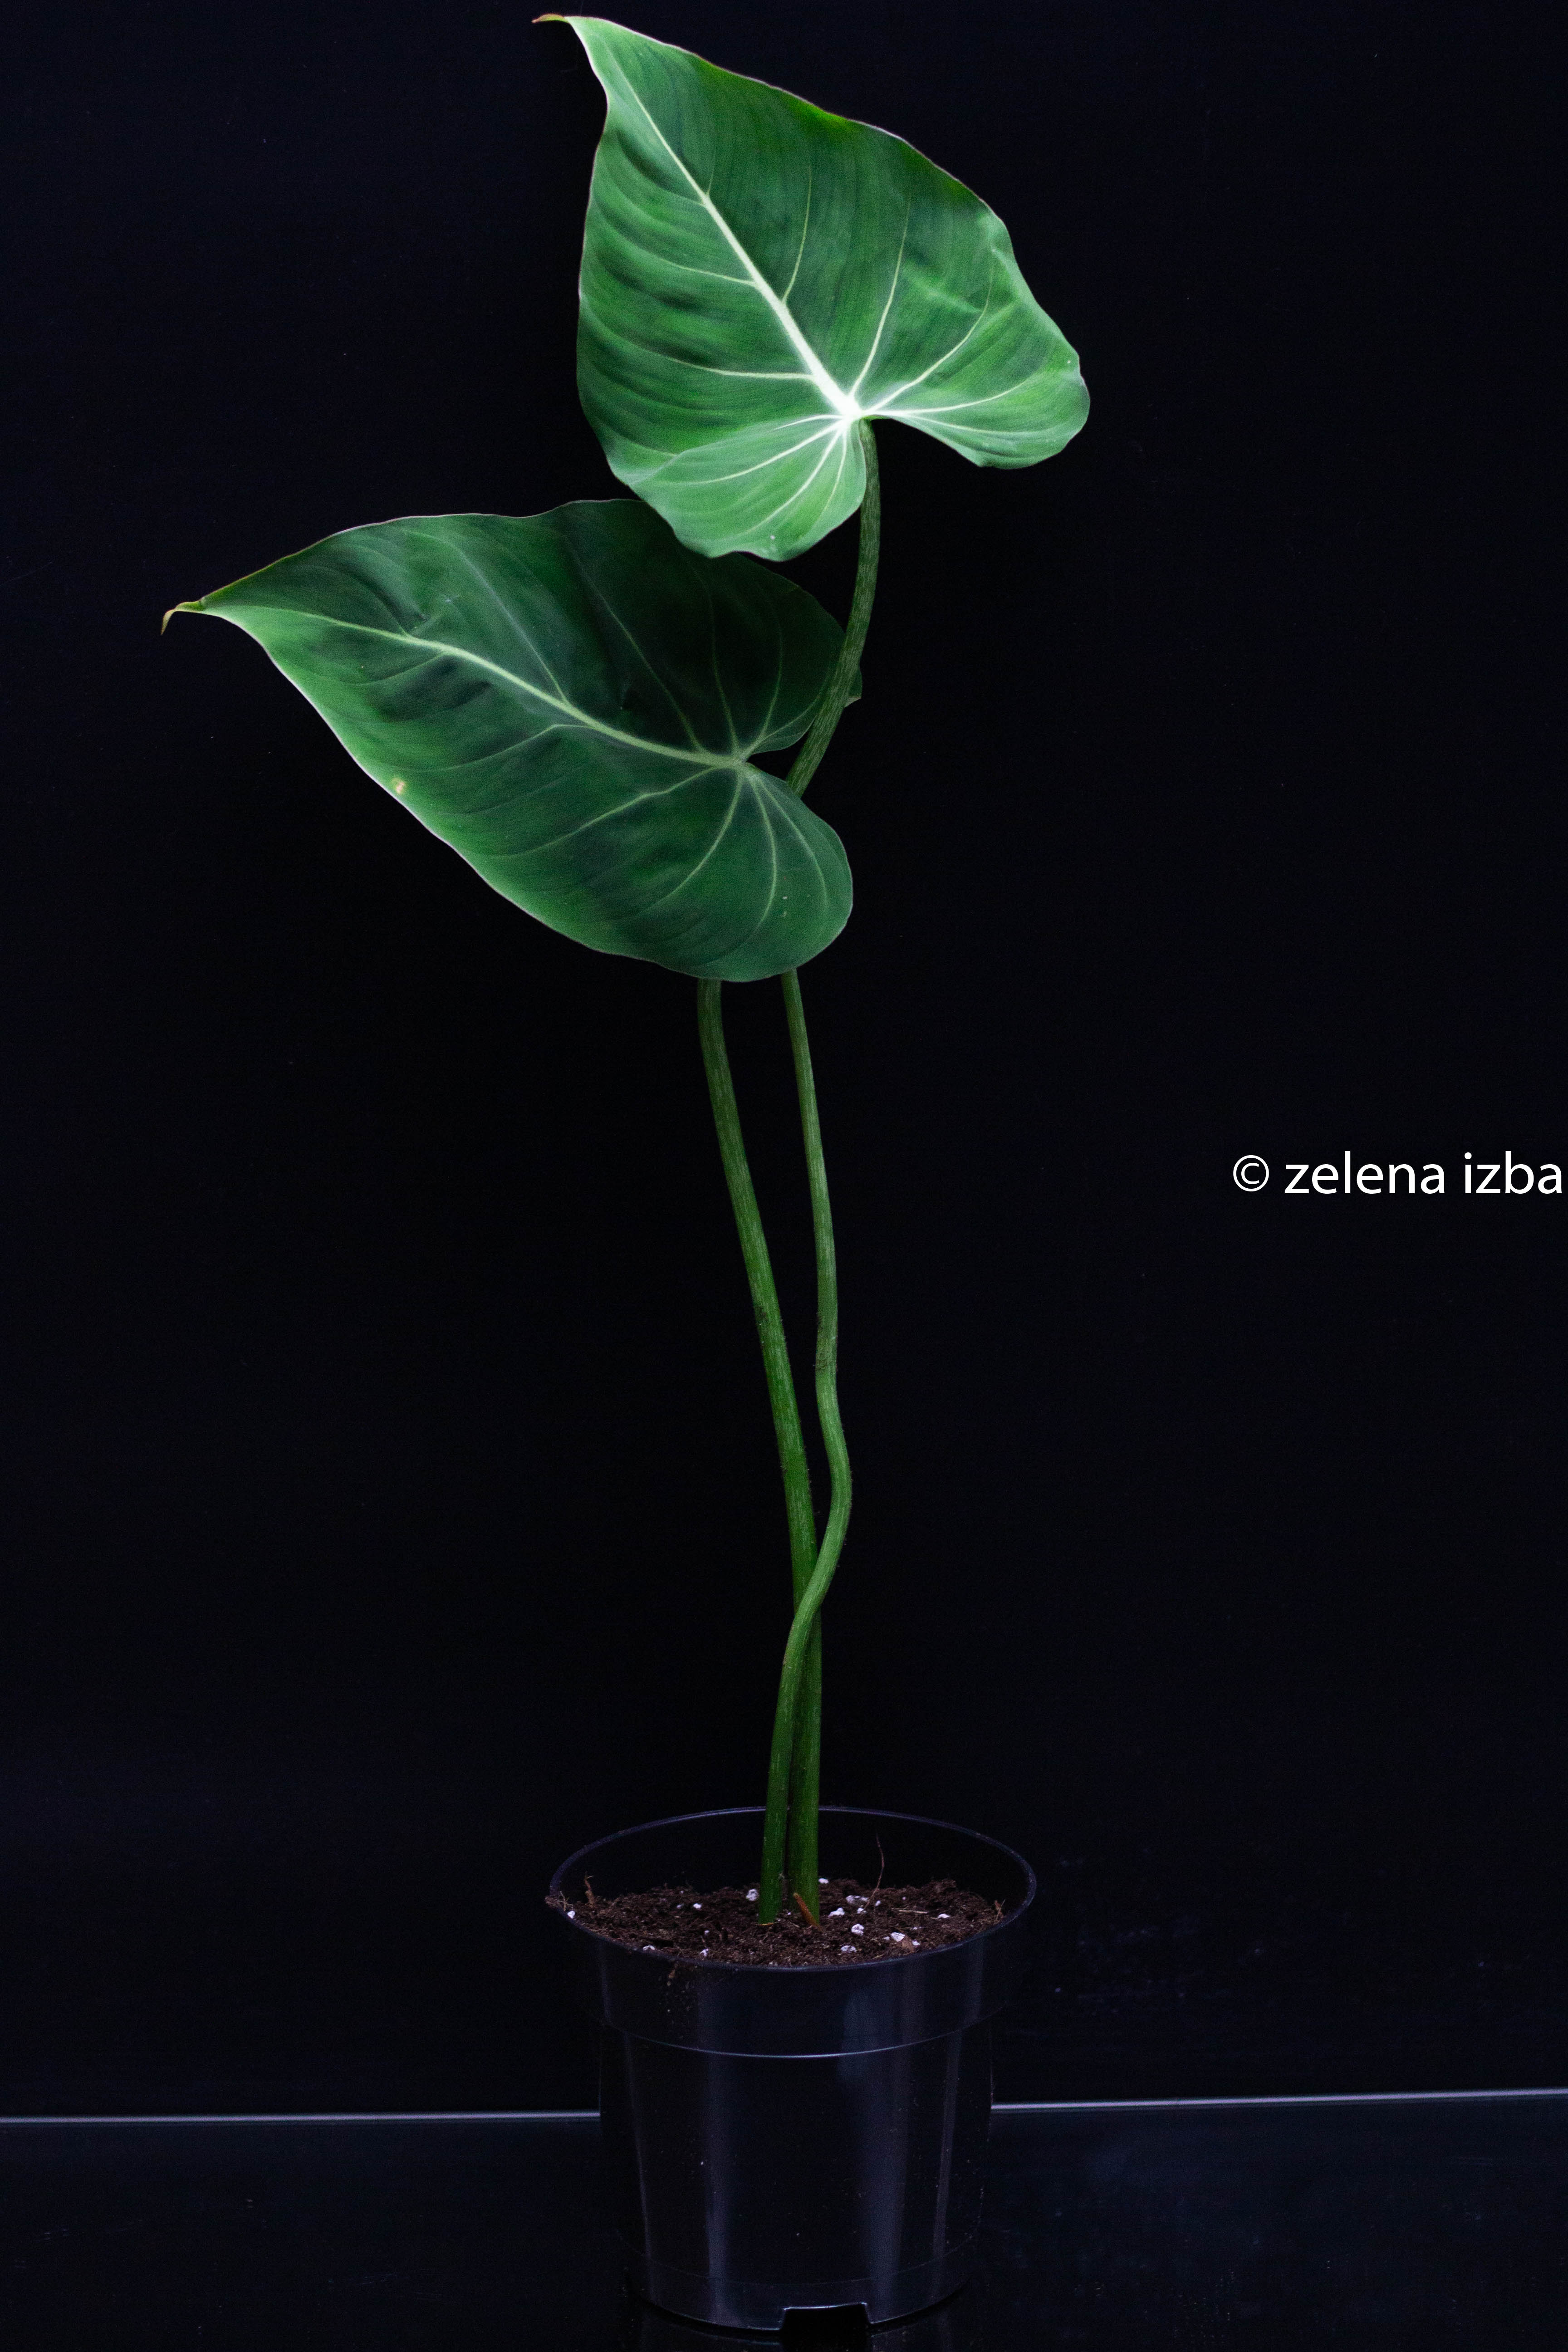 Philodendron gloriosum “L”